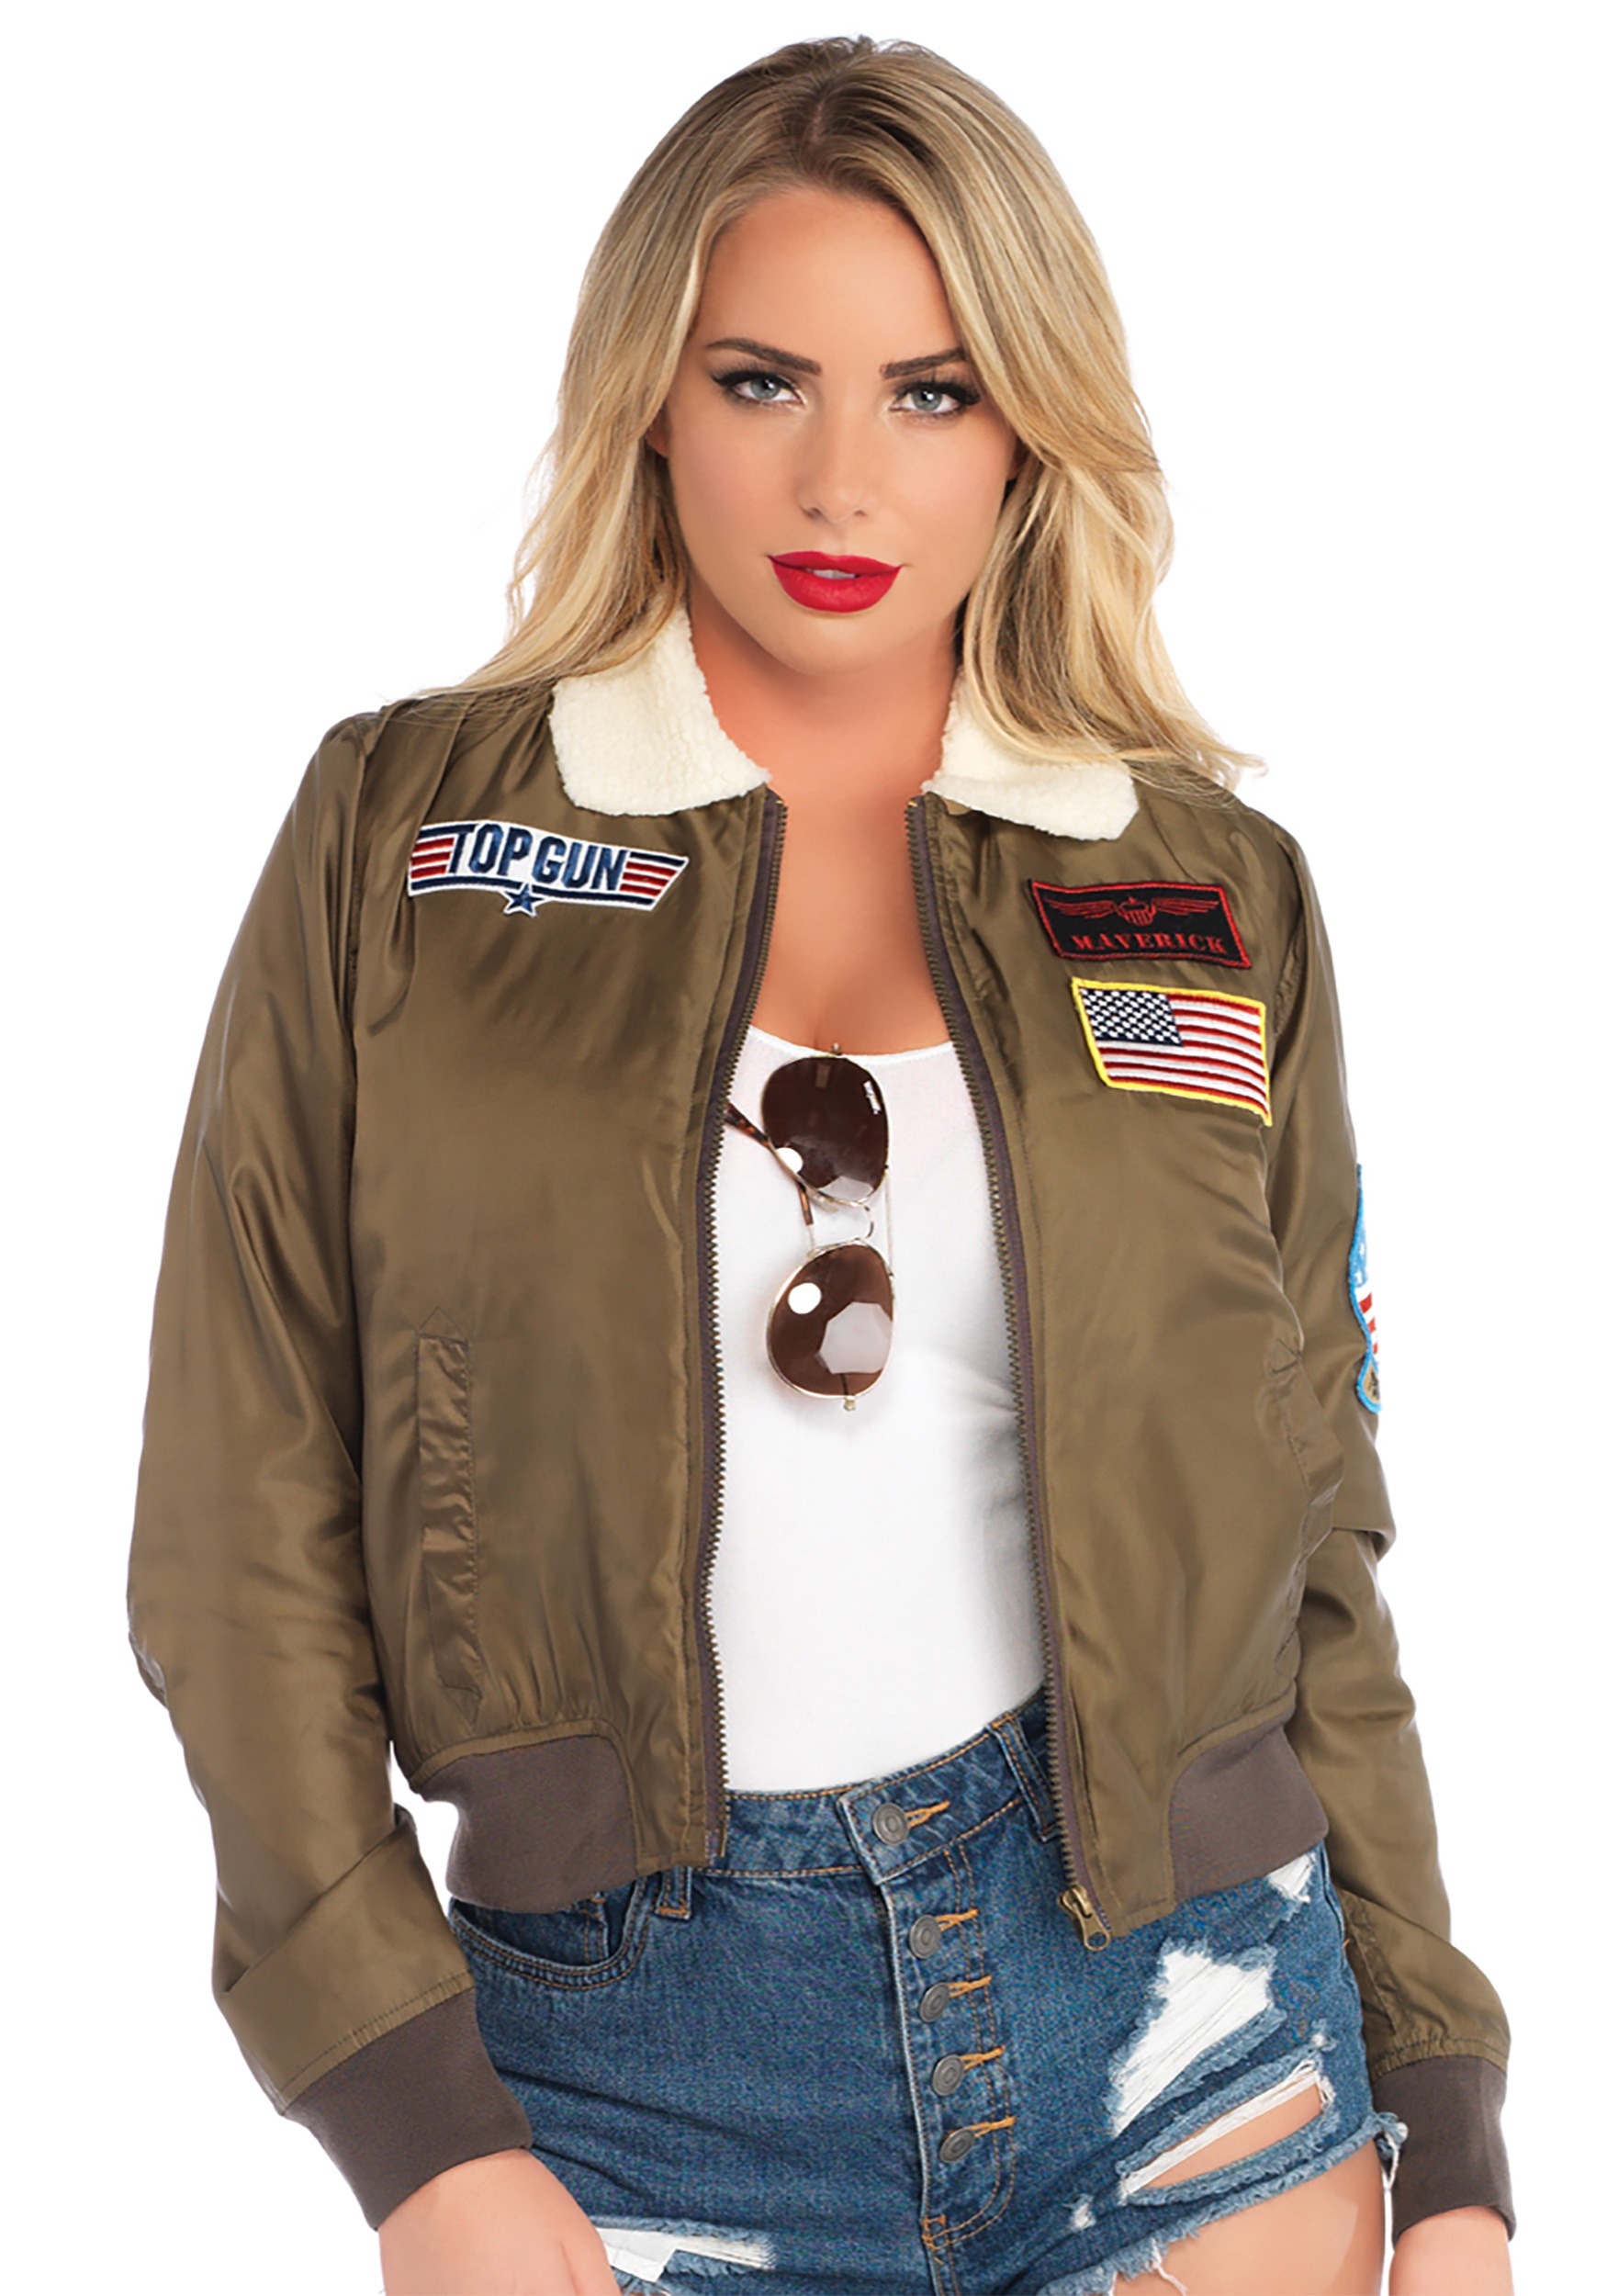 Image of Top Gun Bomber Women's Jacket Costume ID LETG86735-M